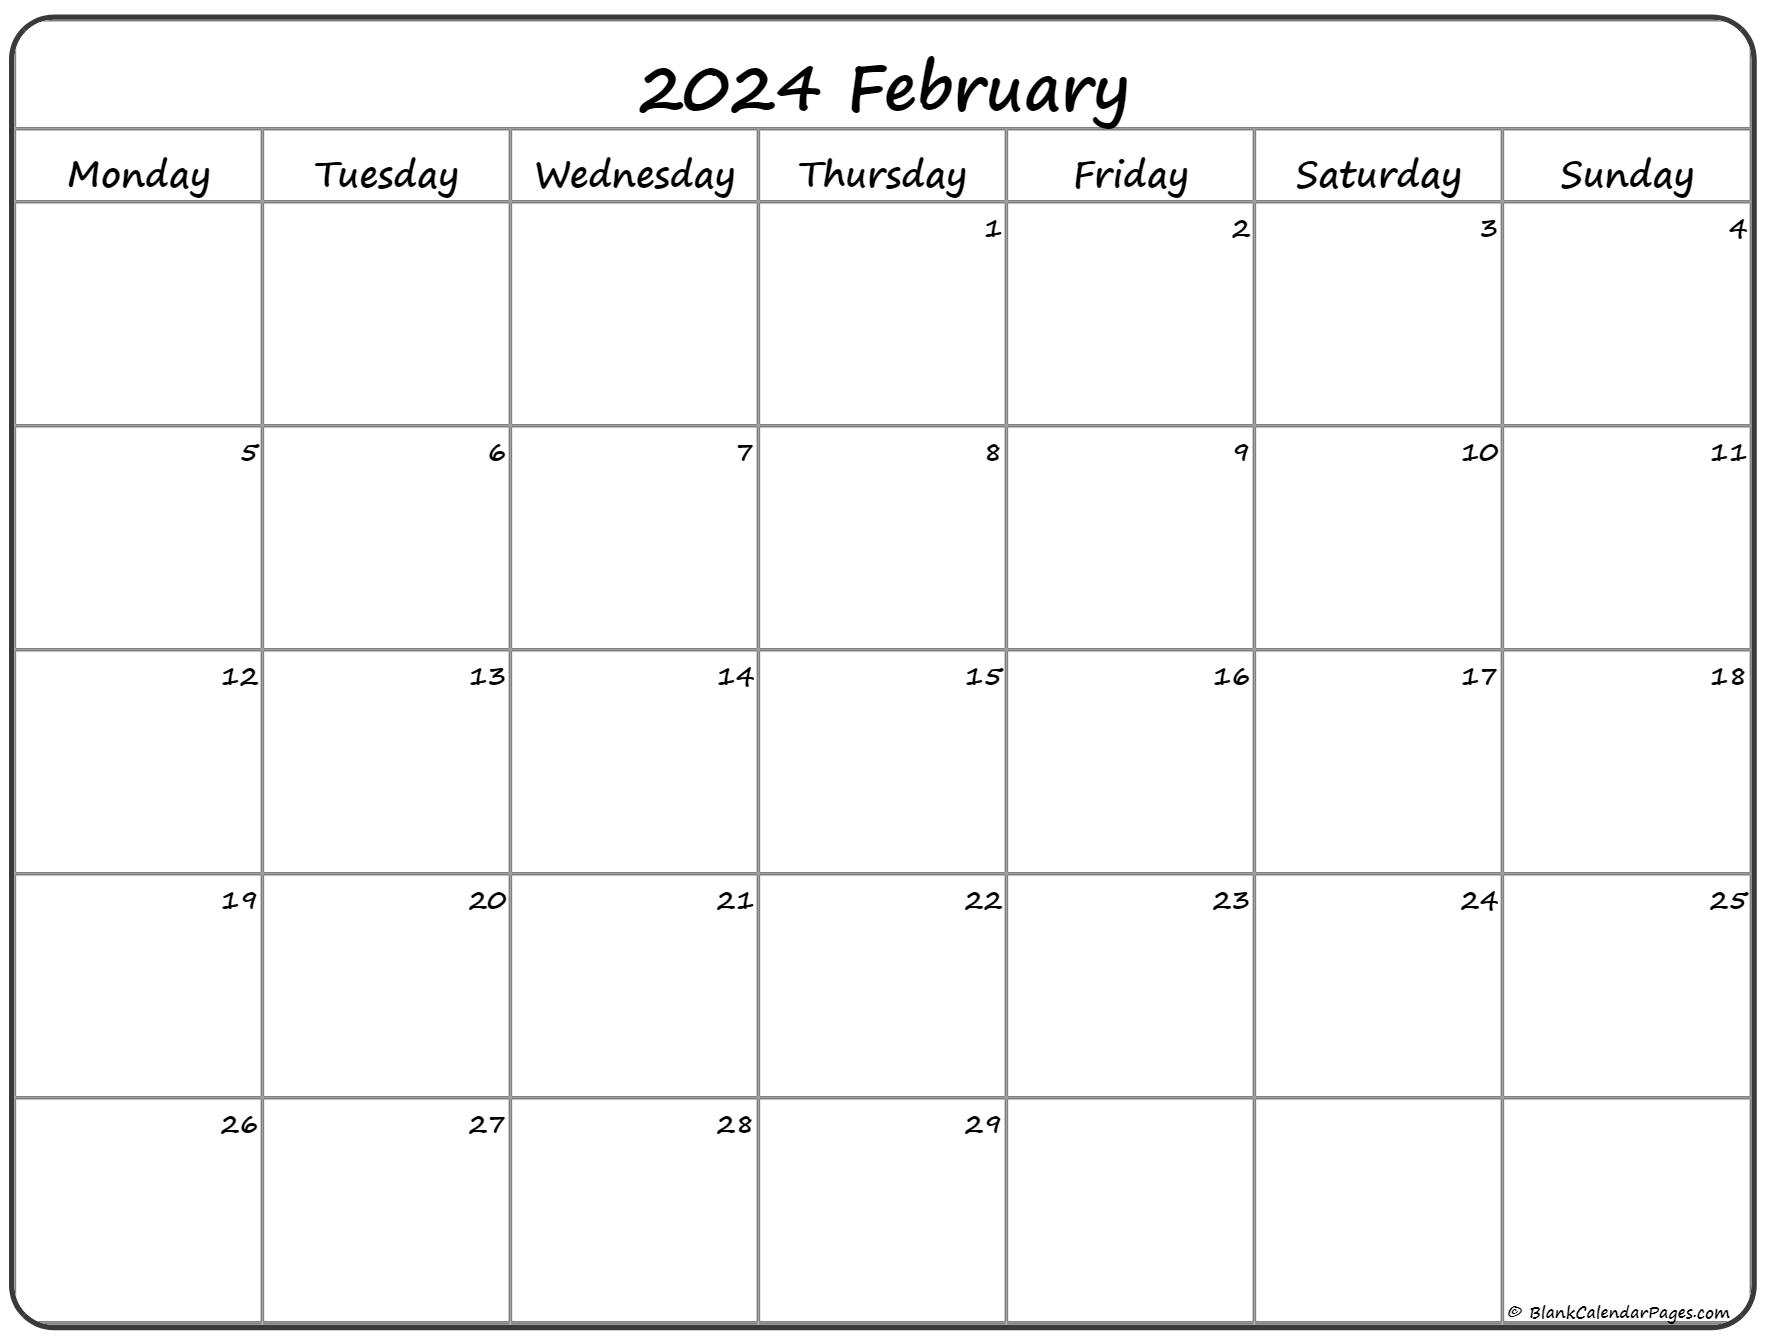 free-2023-calendar-monday-start-download-printable-templates-online